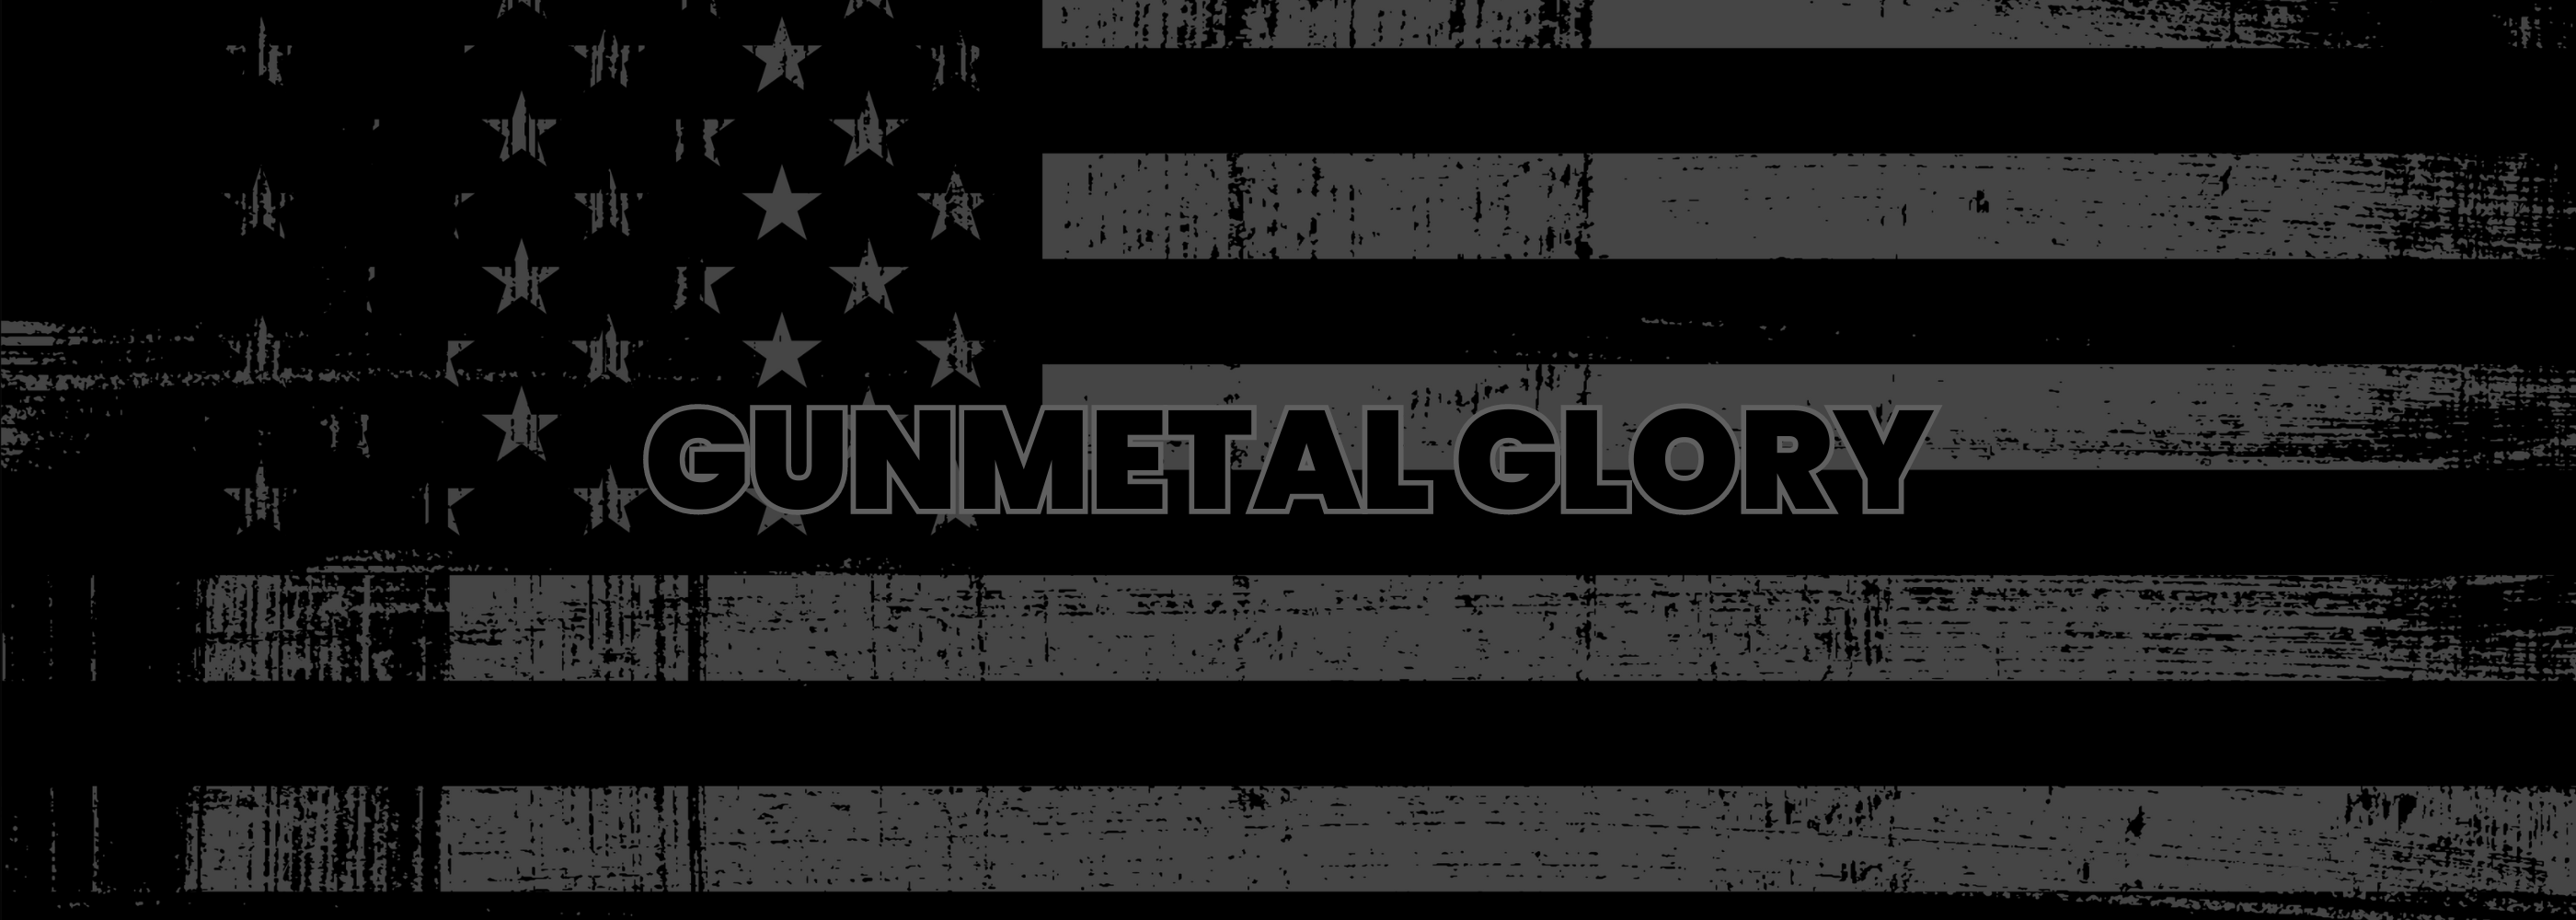 Gunmetal Glory